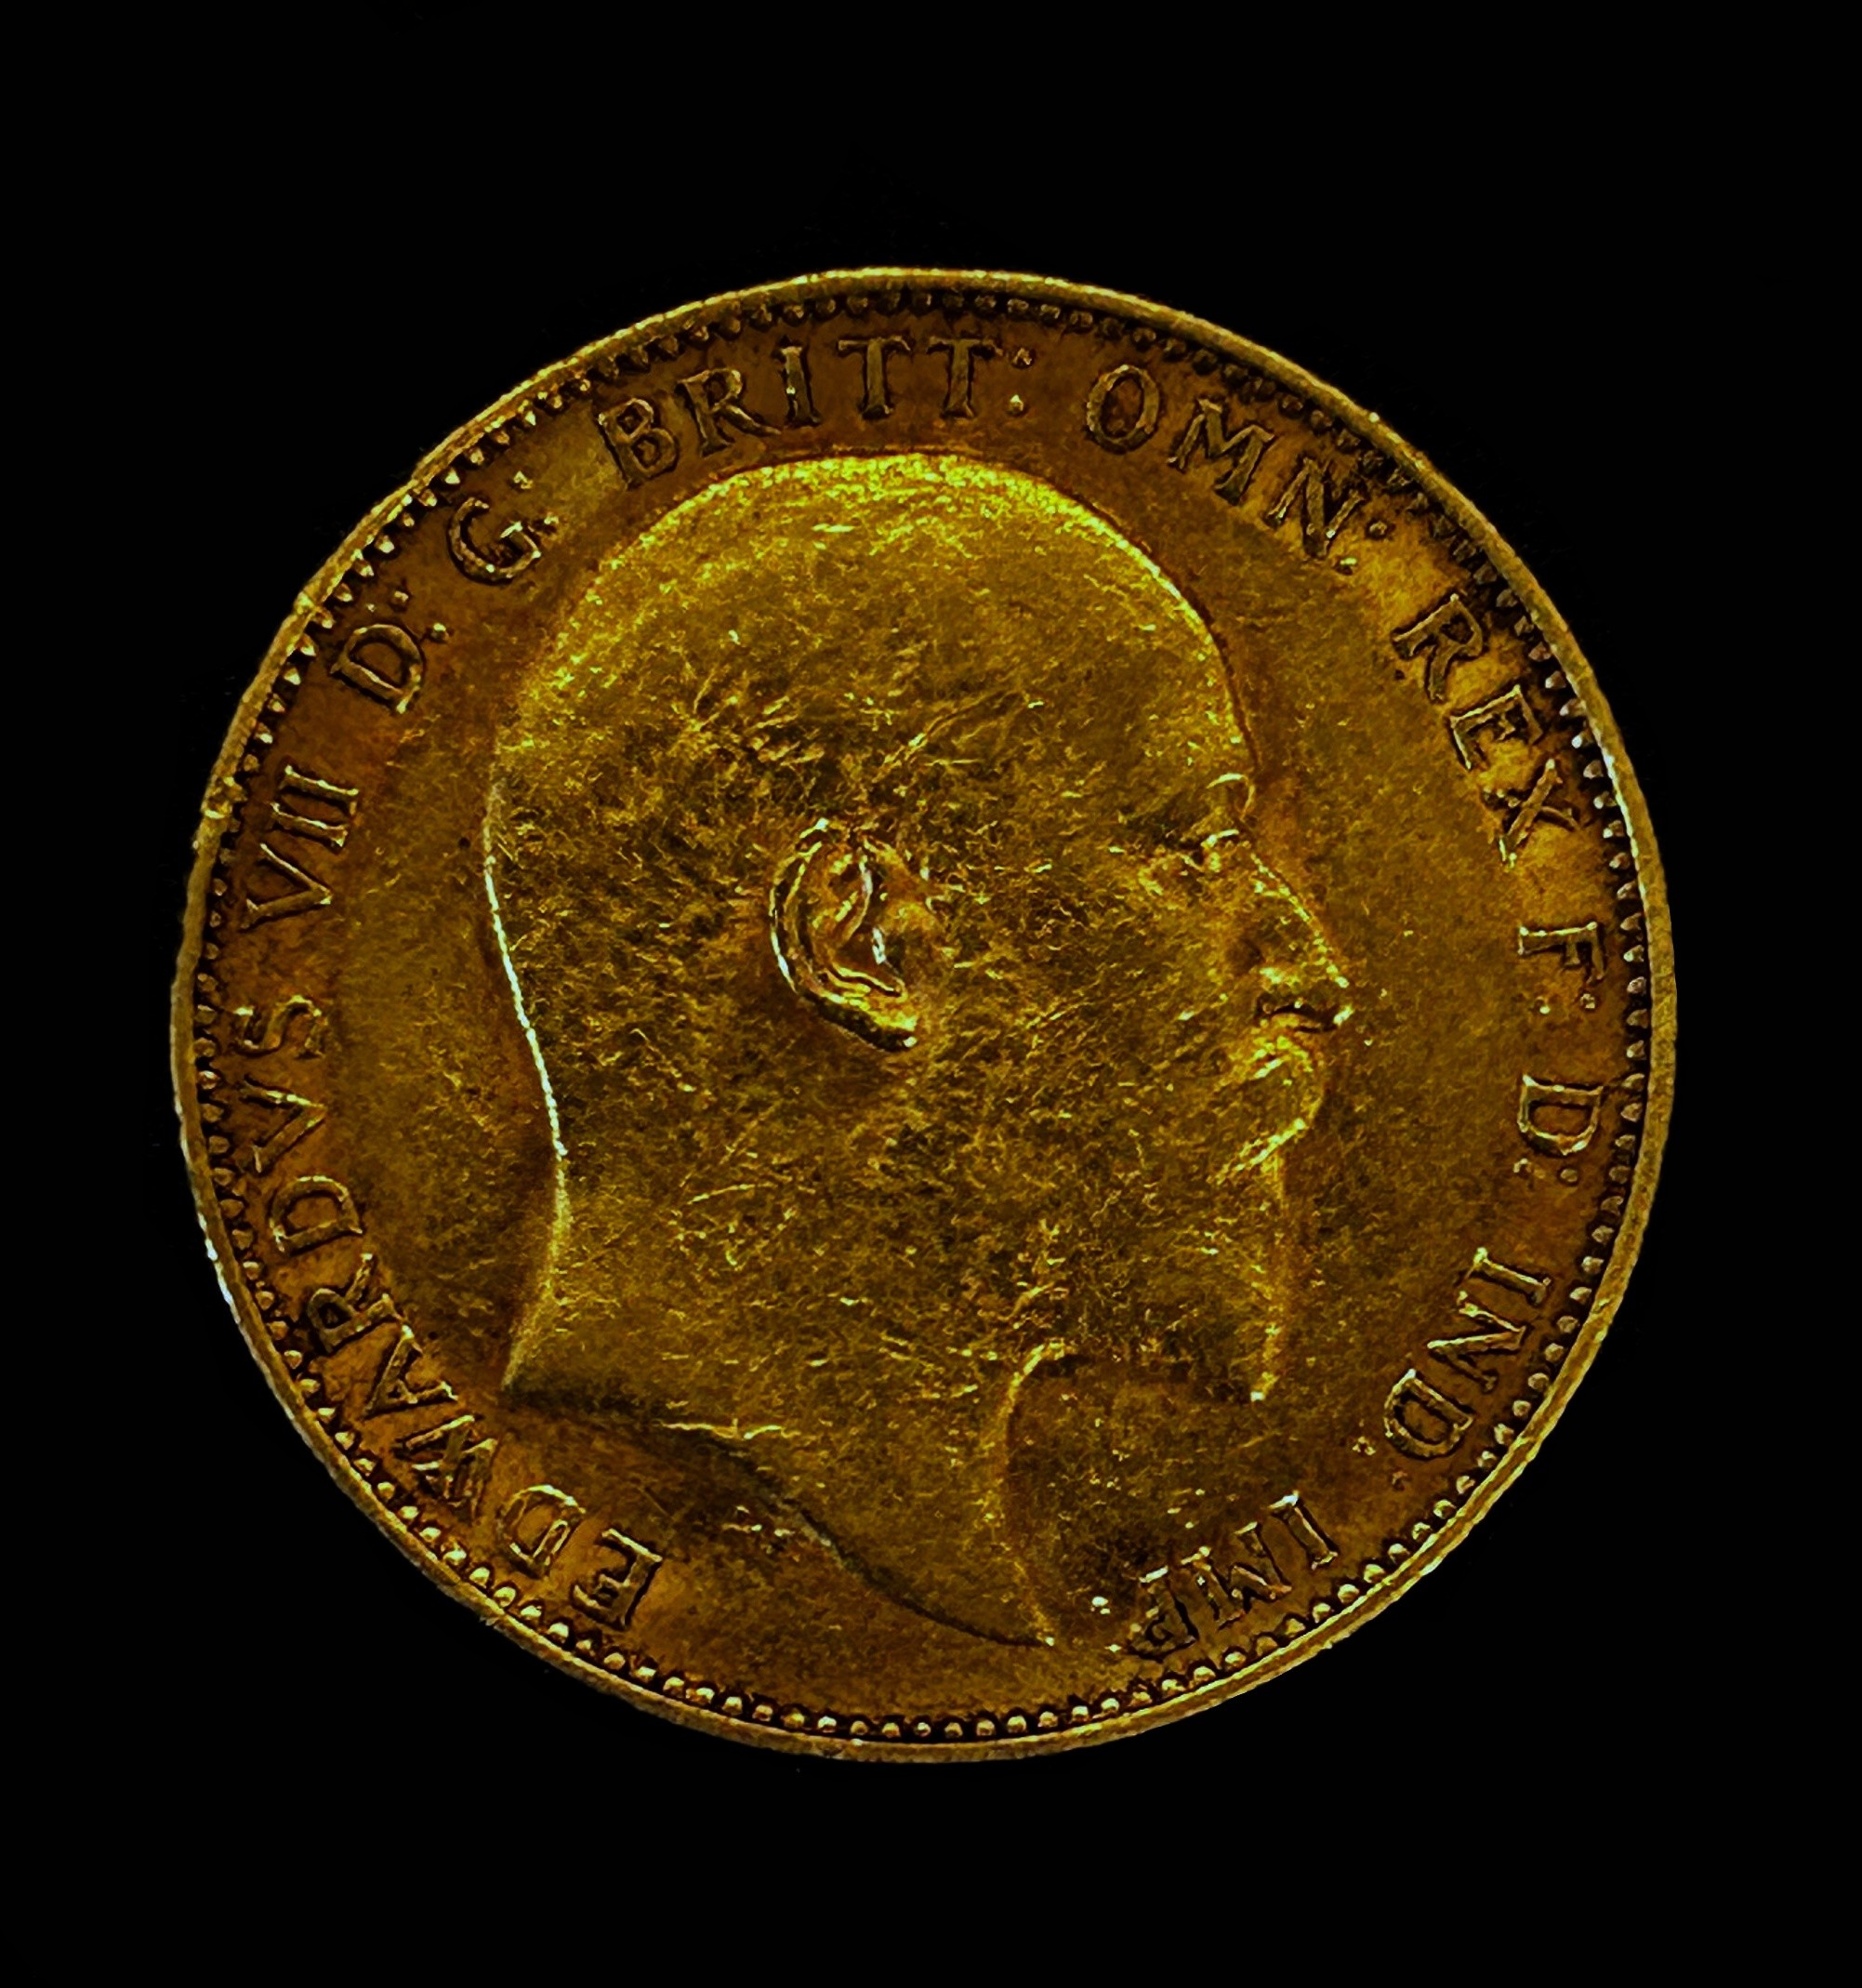 1903 full sovereign - Image 2 of 2